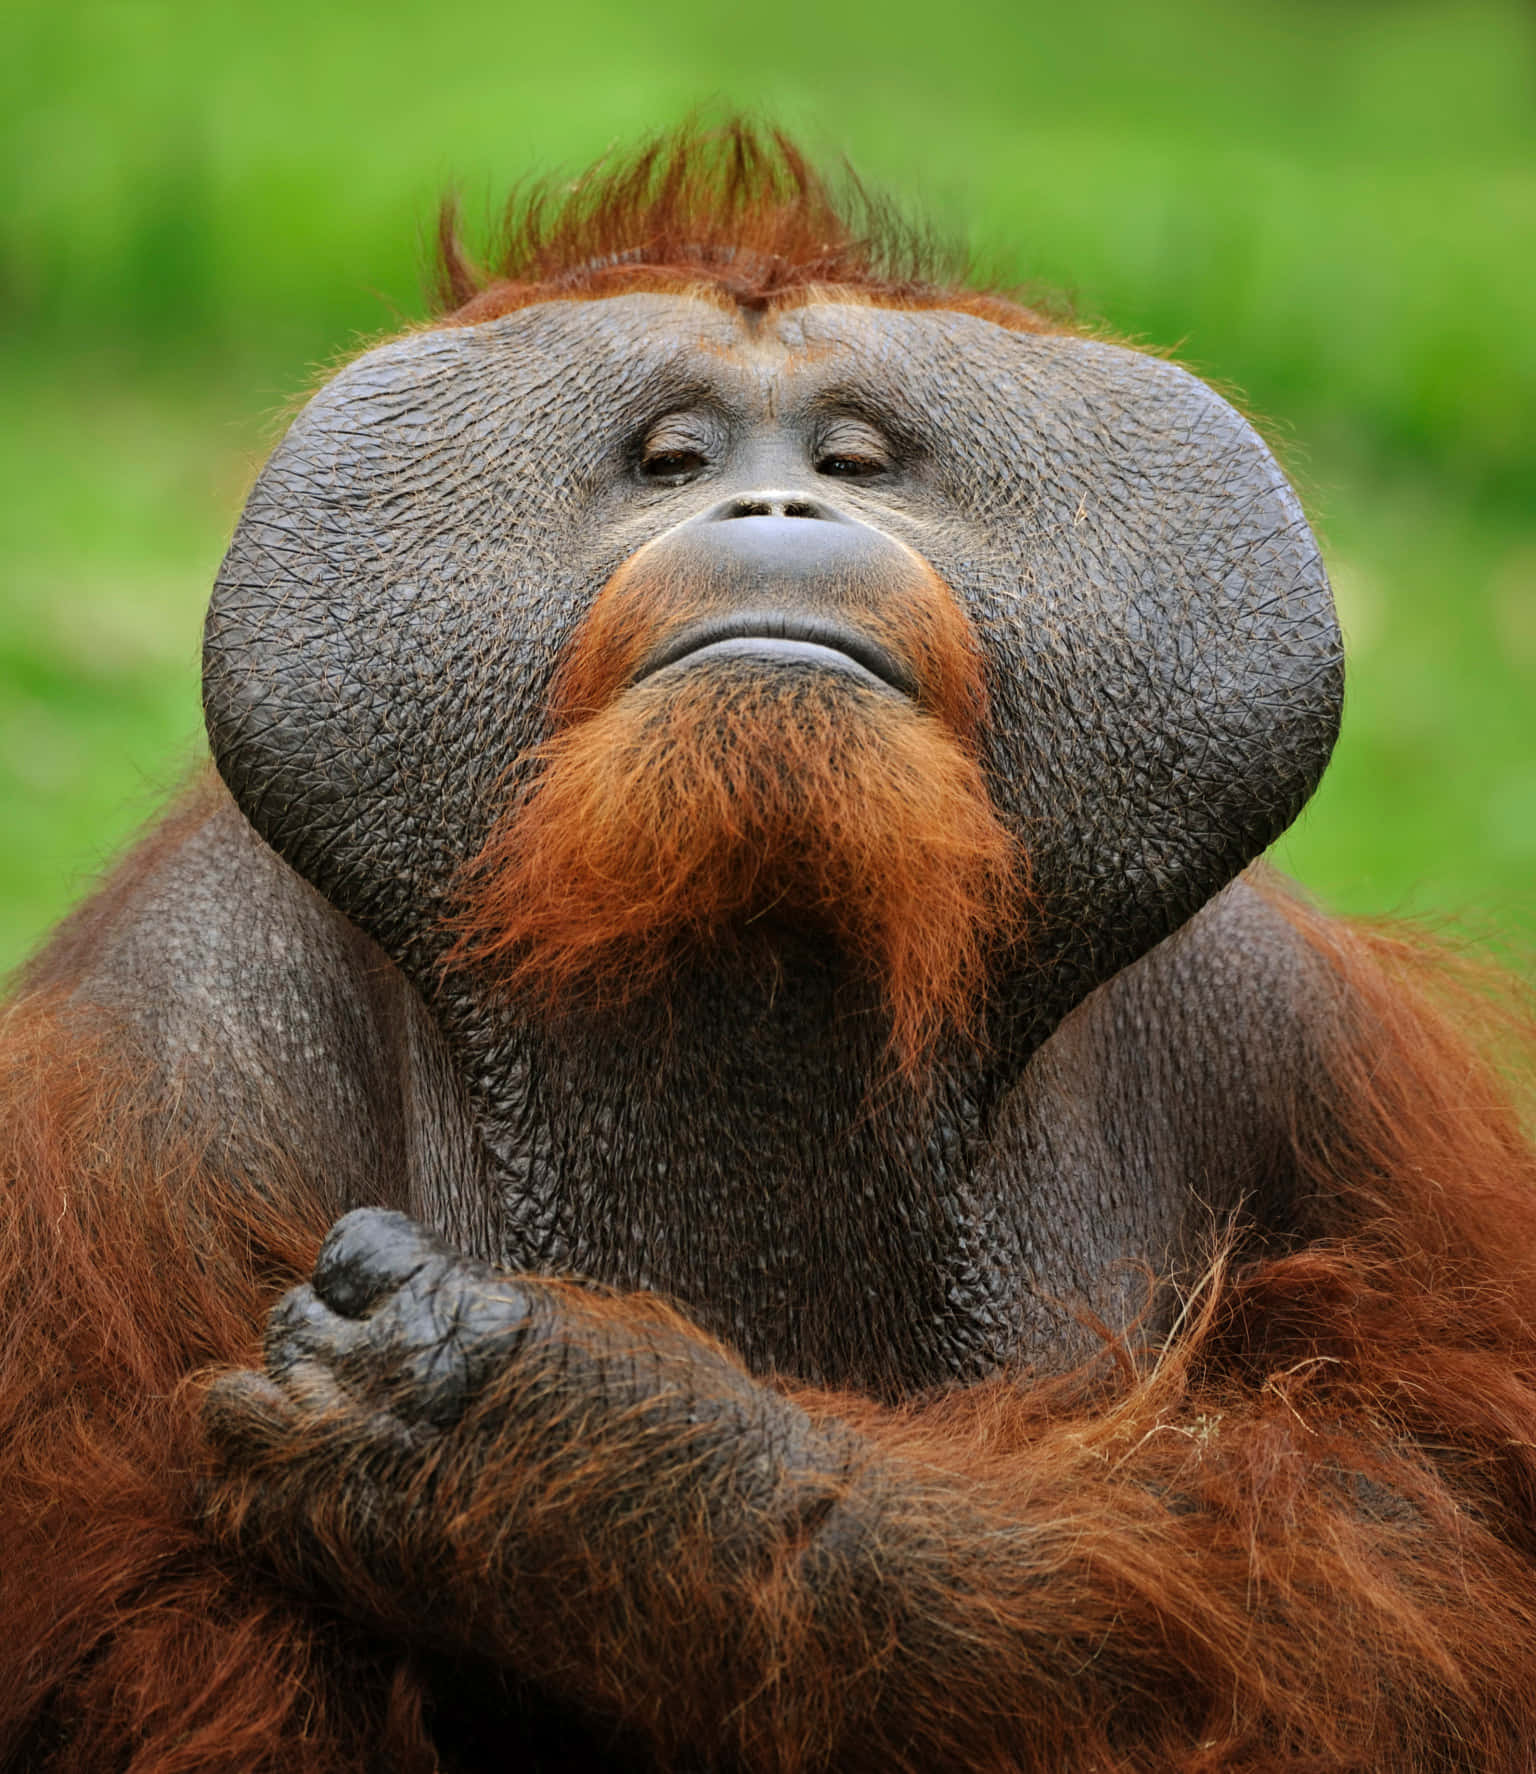 A Curious Orangutan Reaching Out in Nature